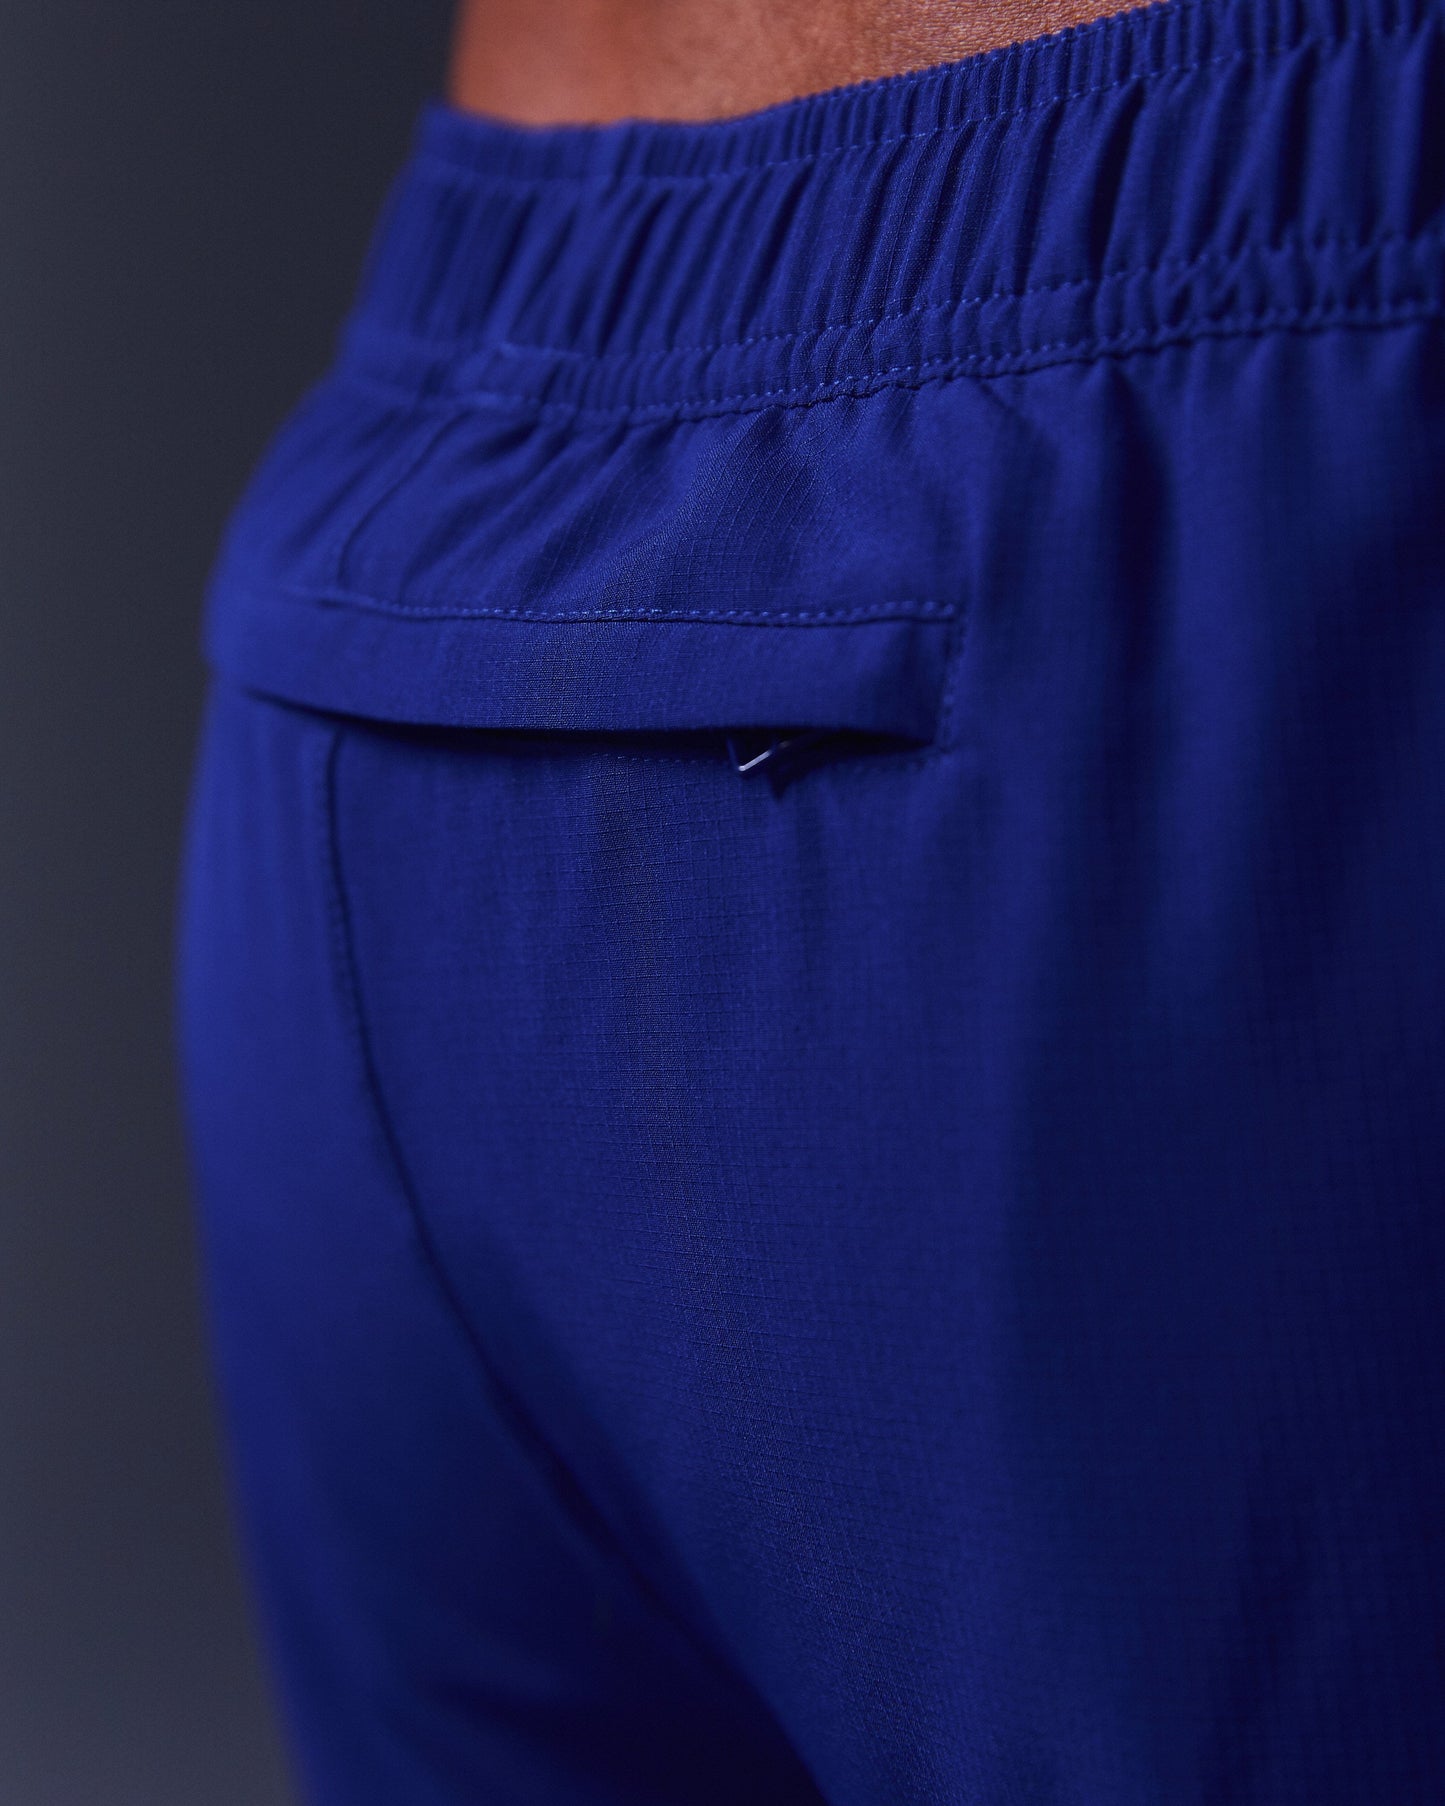 SUDU SRS 01 Run Shorts - Belleweather Blue / Carmine Rose Shorts